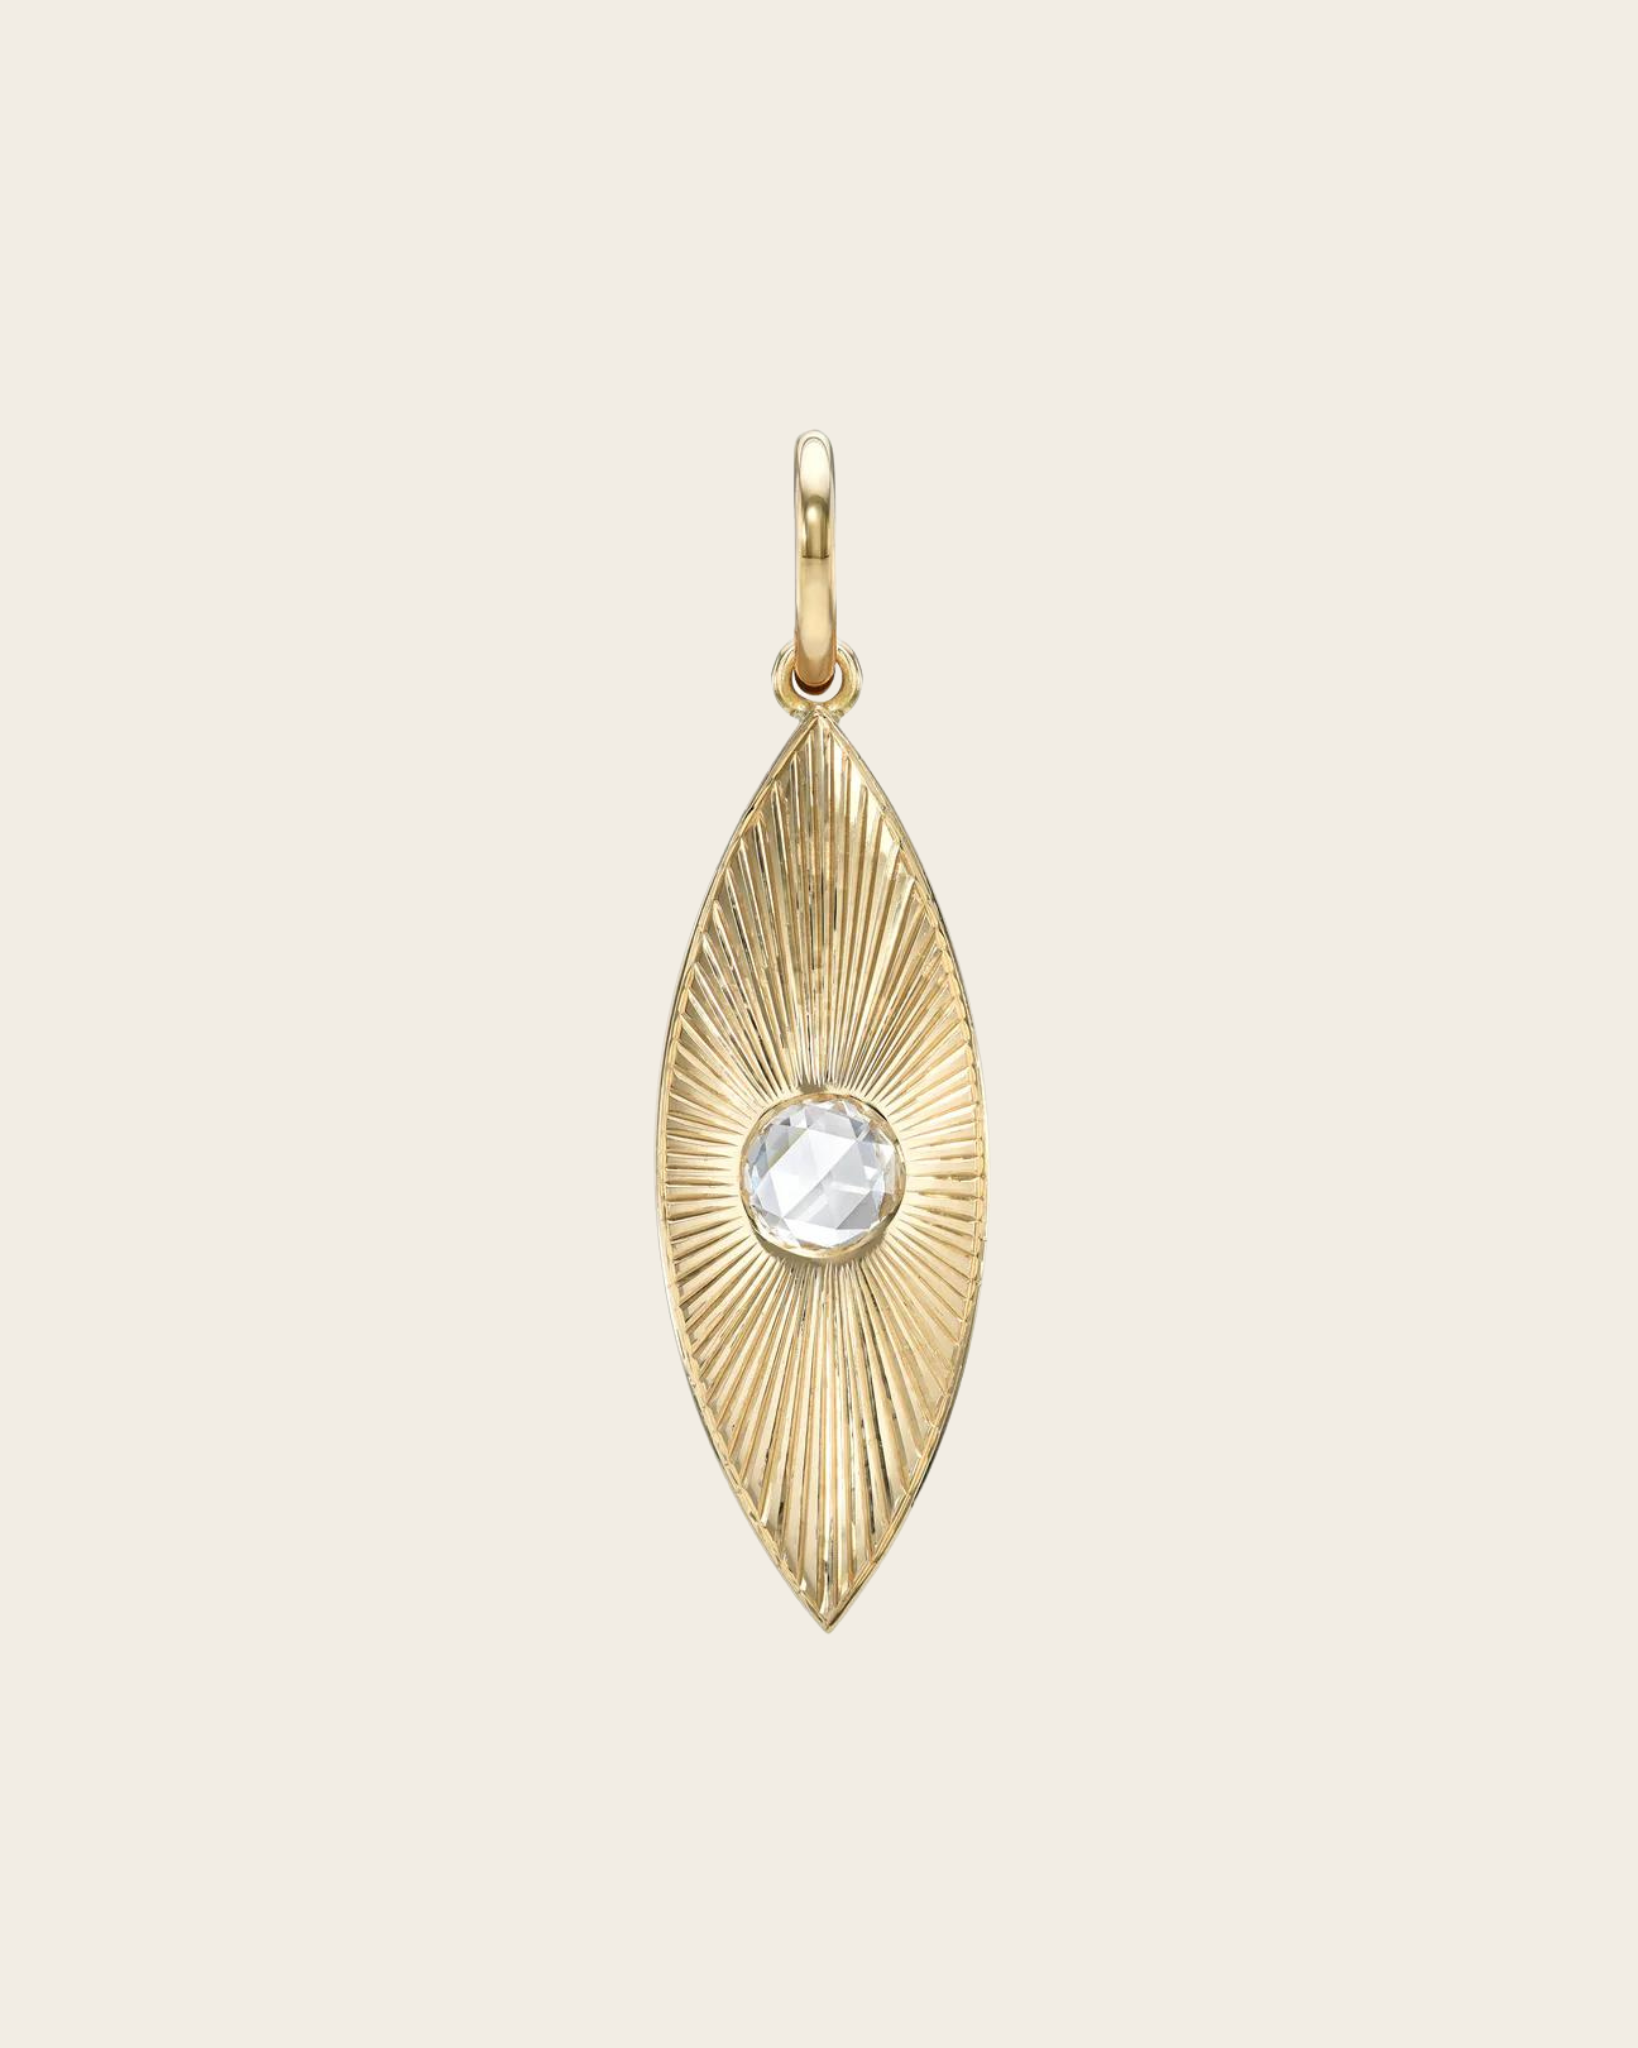 A NAYA gold pendant with a rose cut diamond.